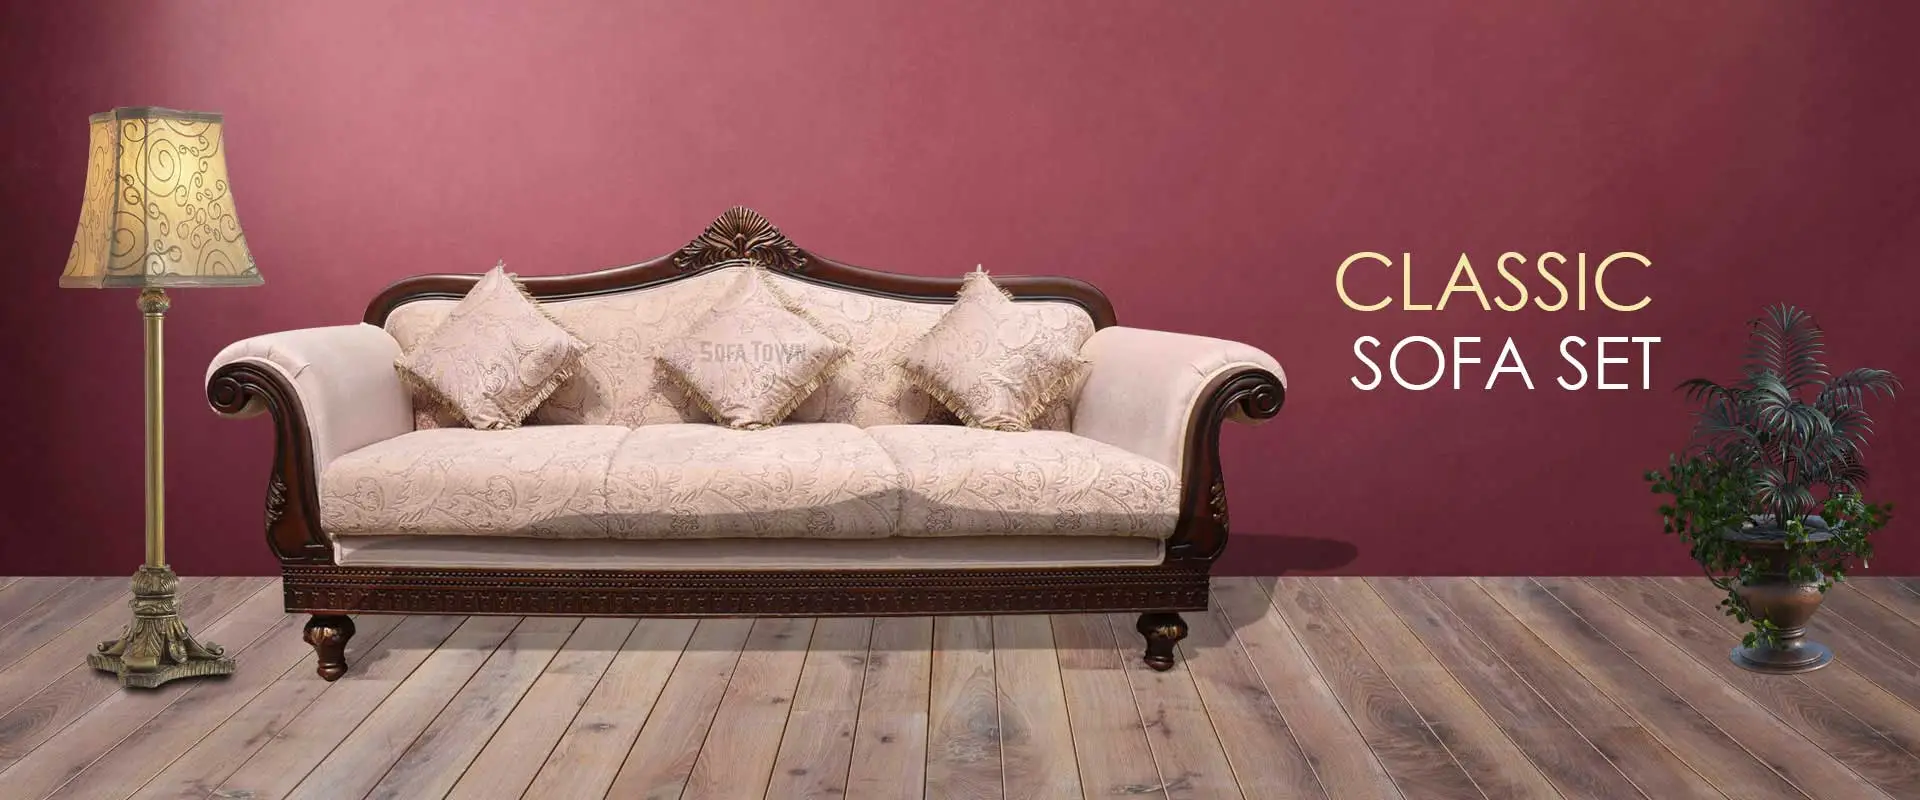 Classic Sofa Setin Delhi